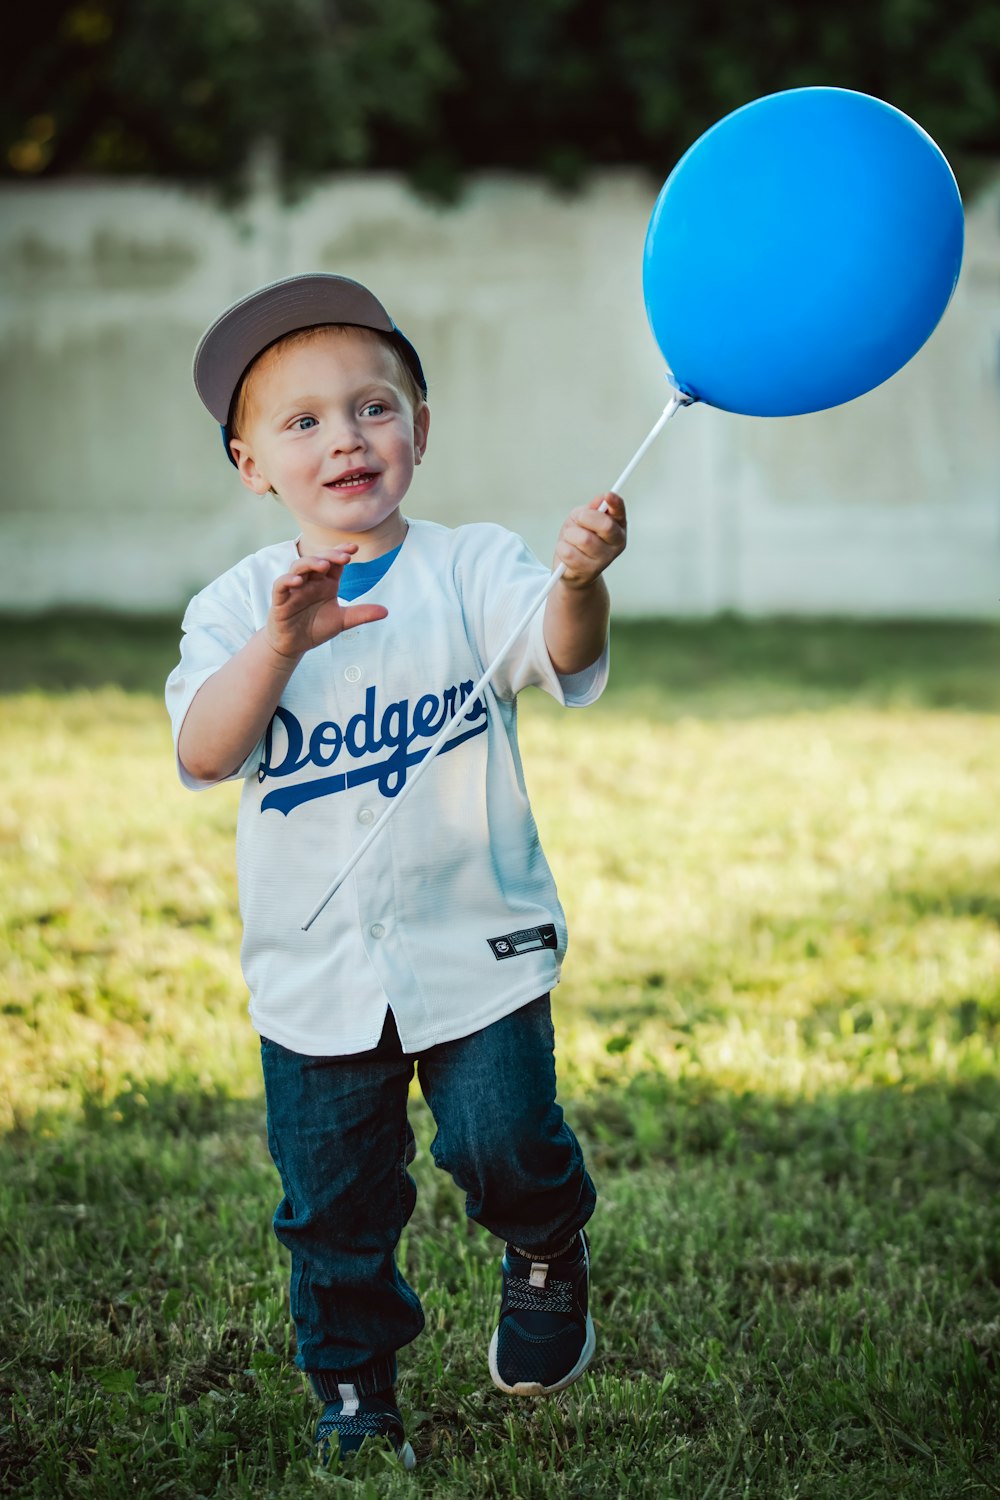 a young boy in a baseball uniform holding a blue balloon